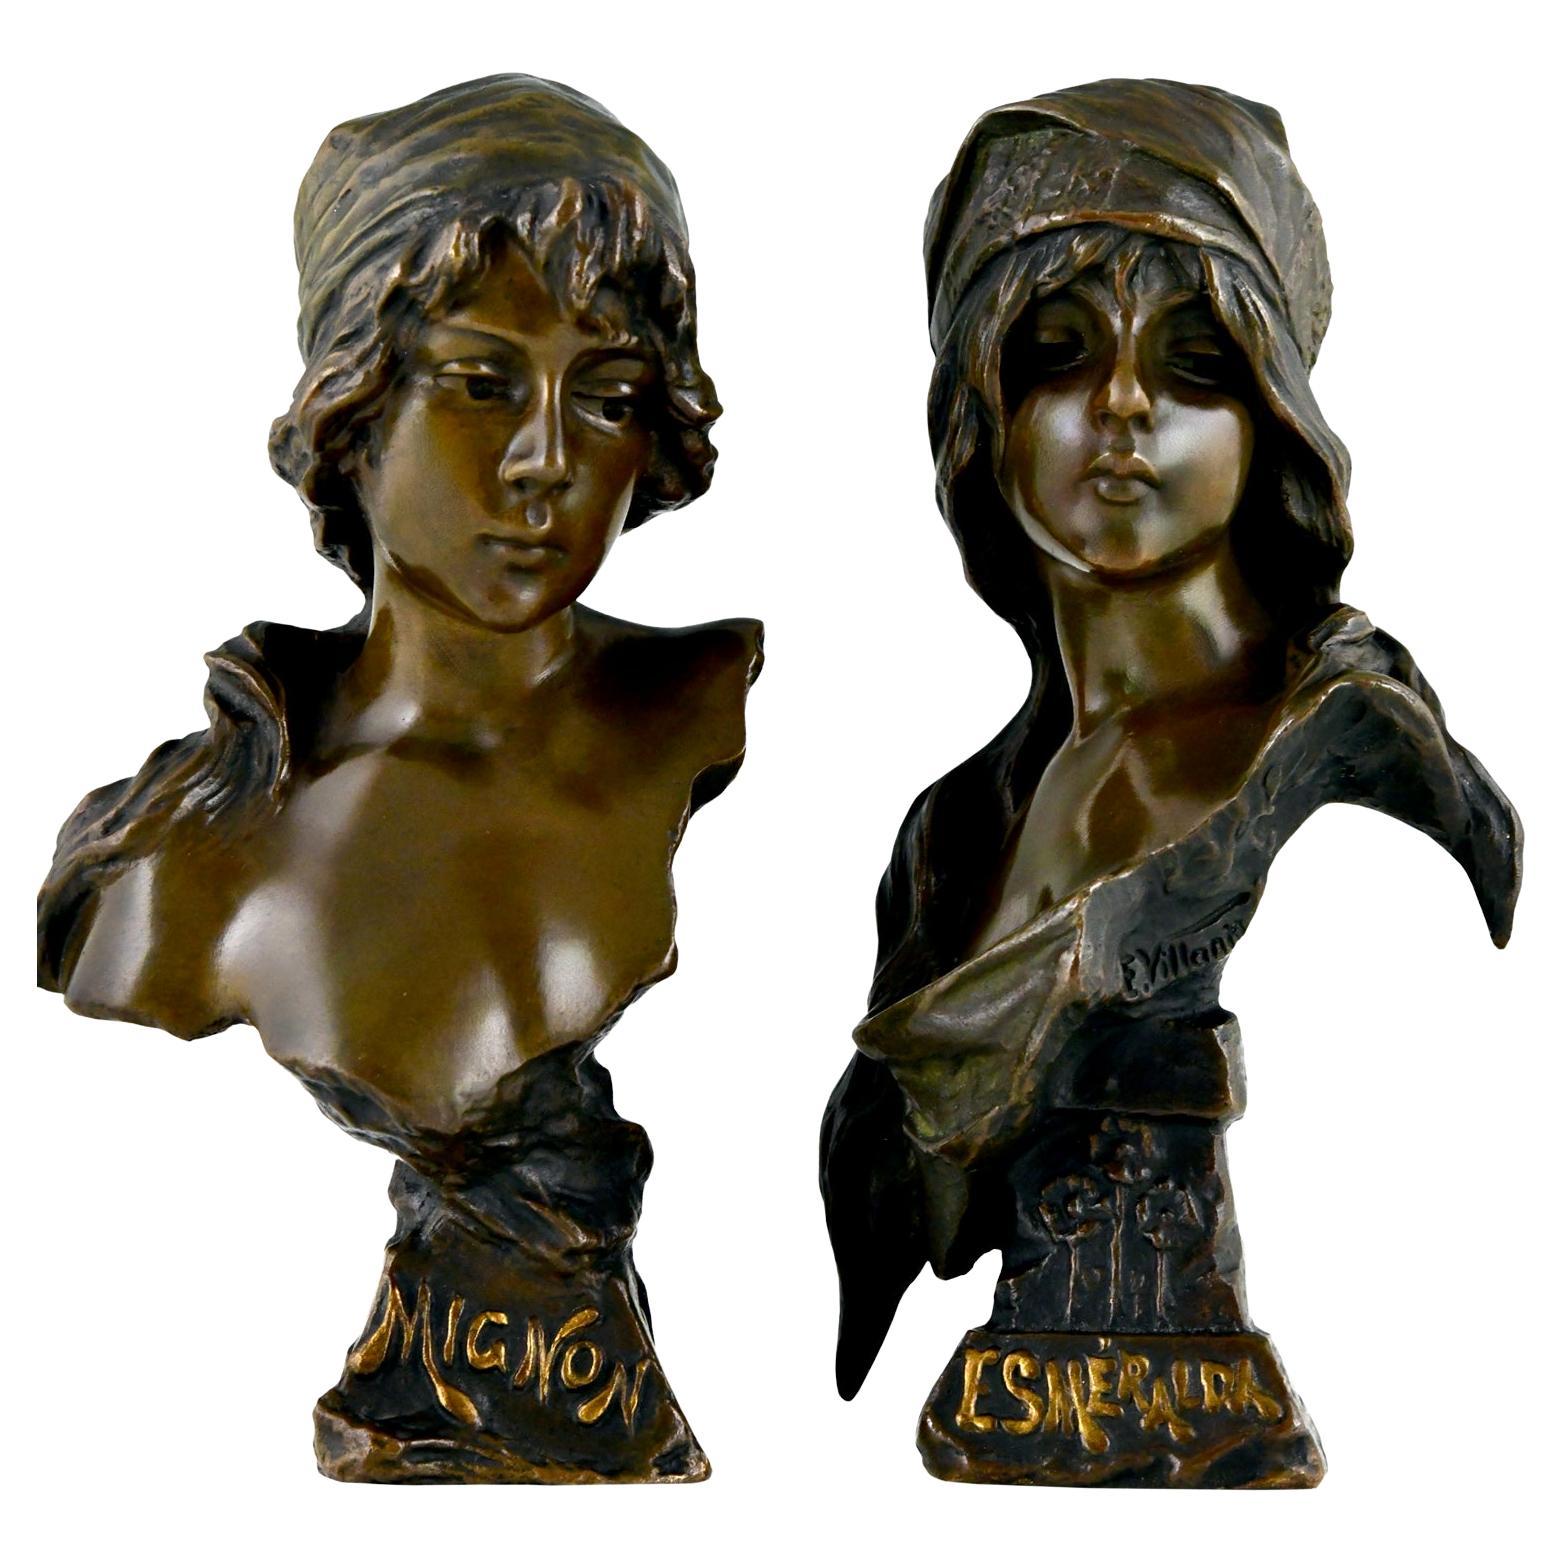 Pair of Art Nouveau bronze busts Mignon and Esmeralda by Emmanuel Villanis, 1896 For Sale